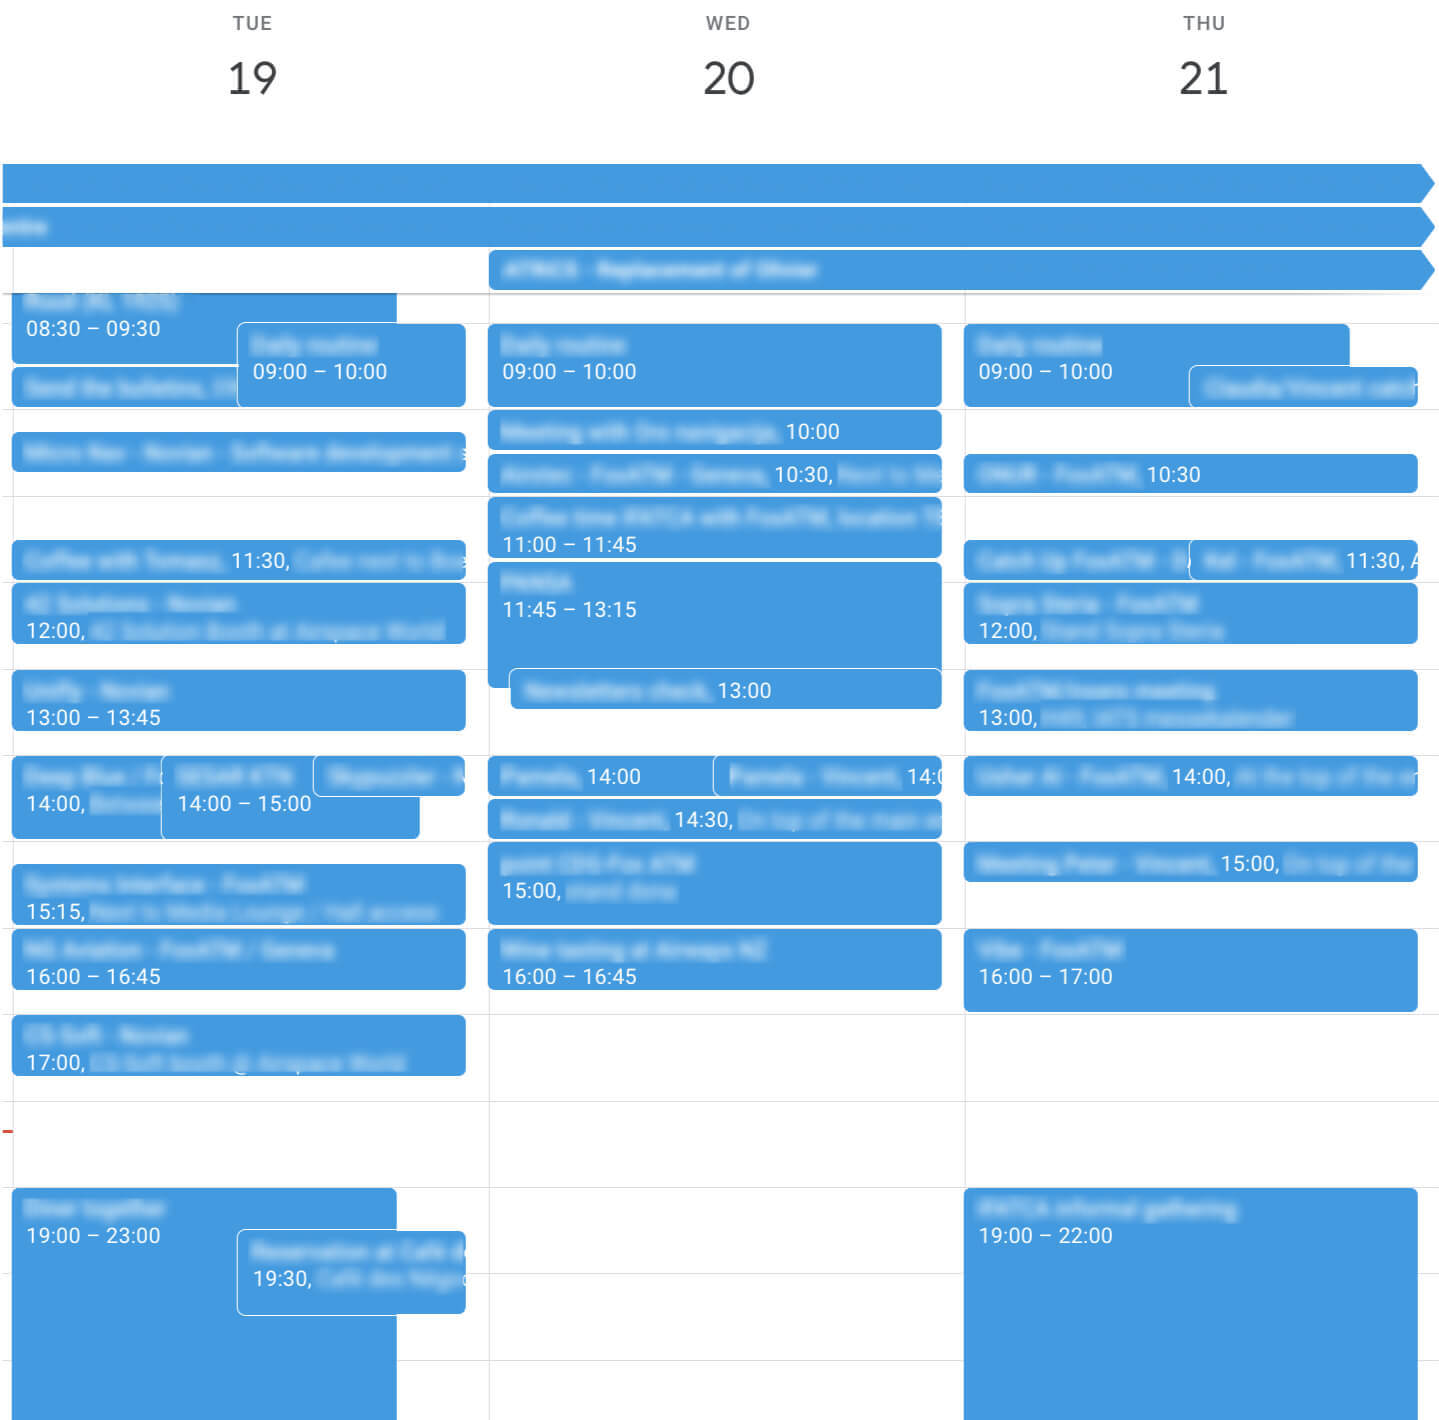 Calendar depicting a busy schedule